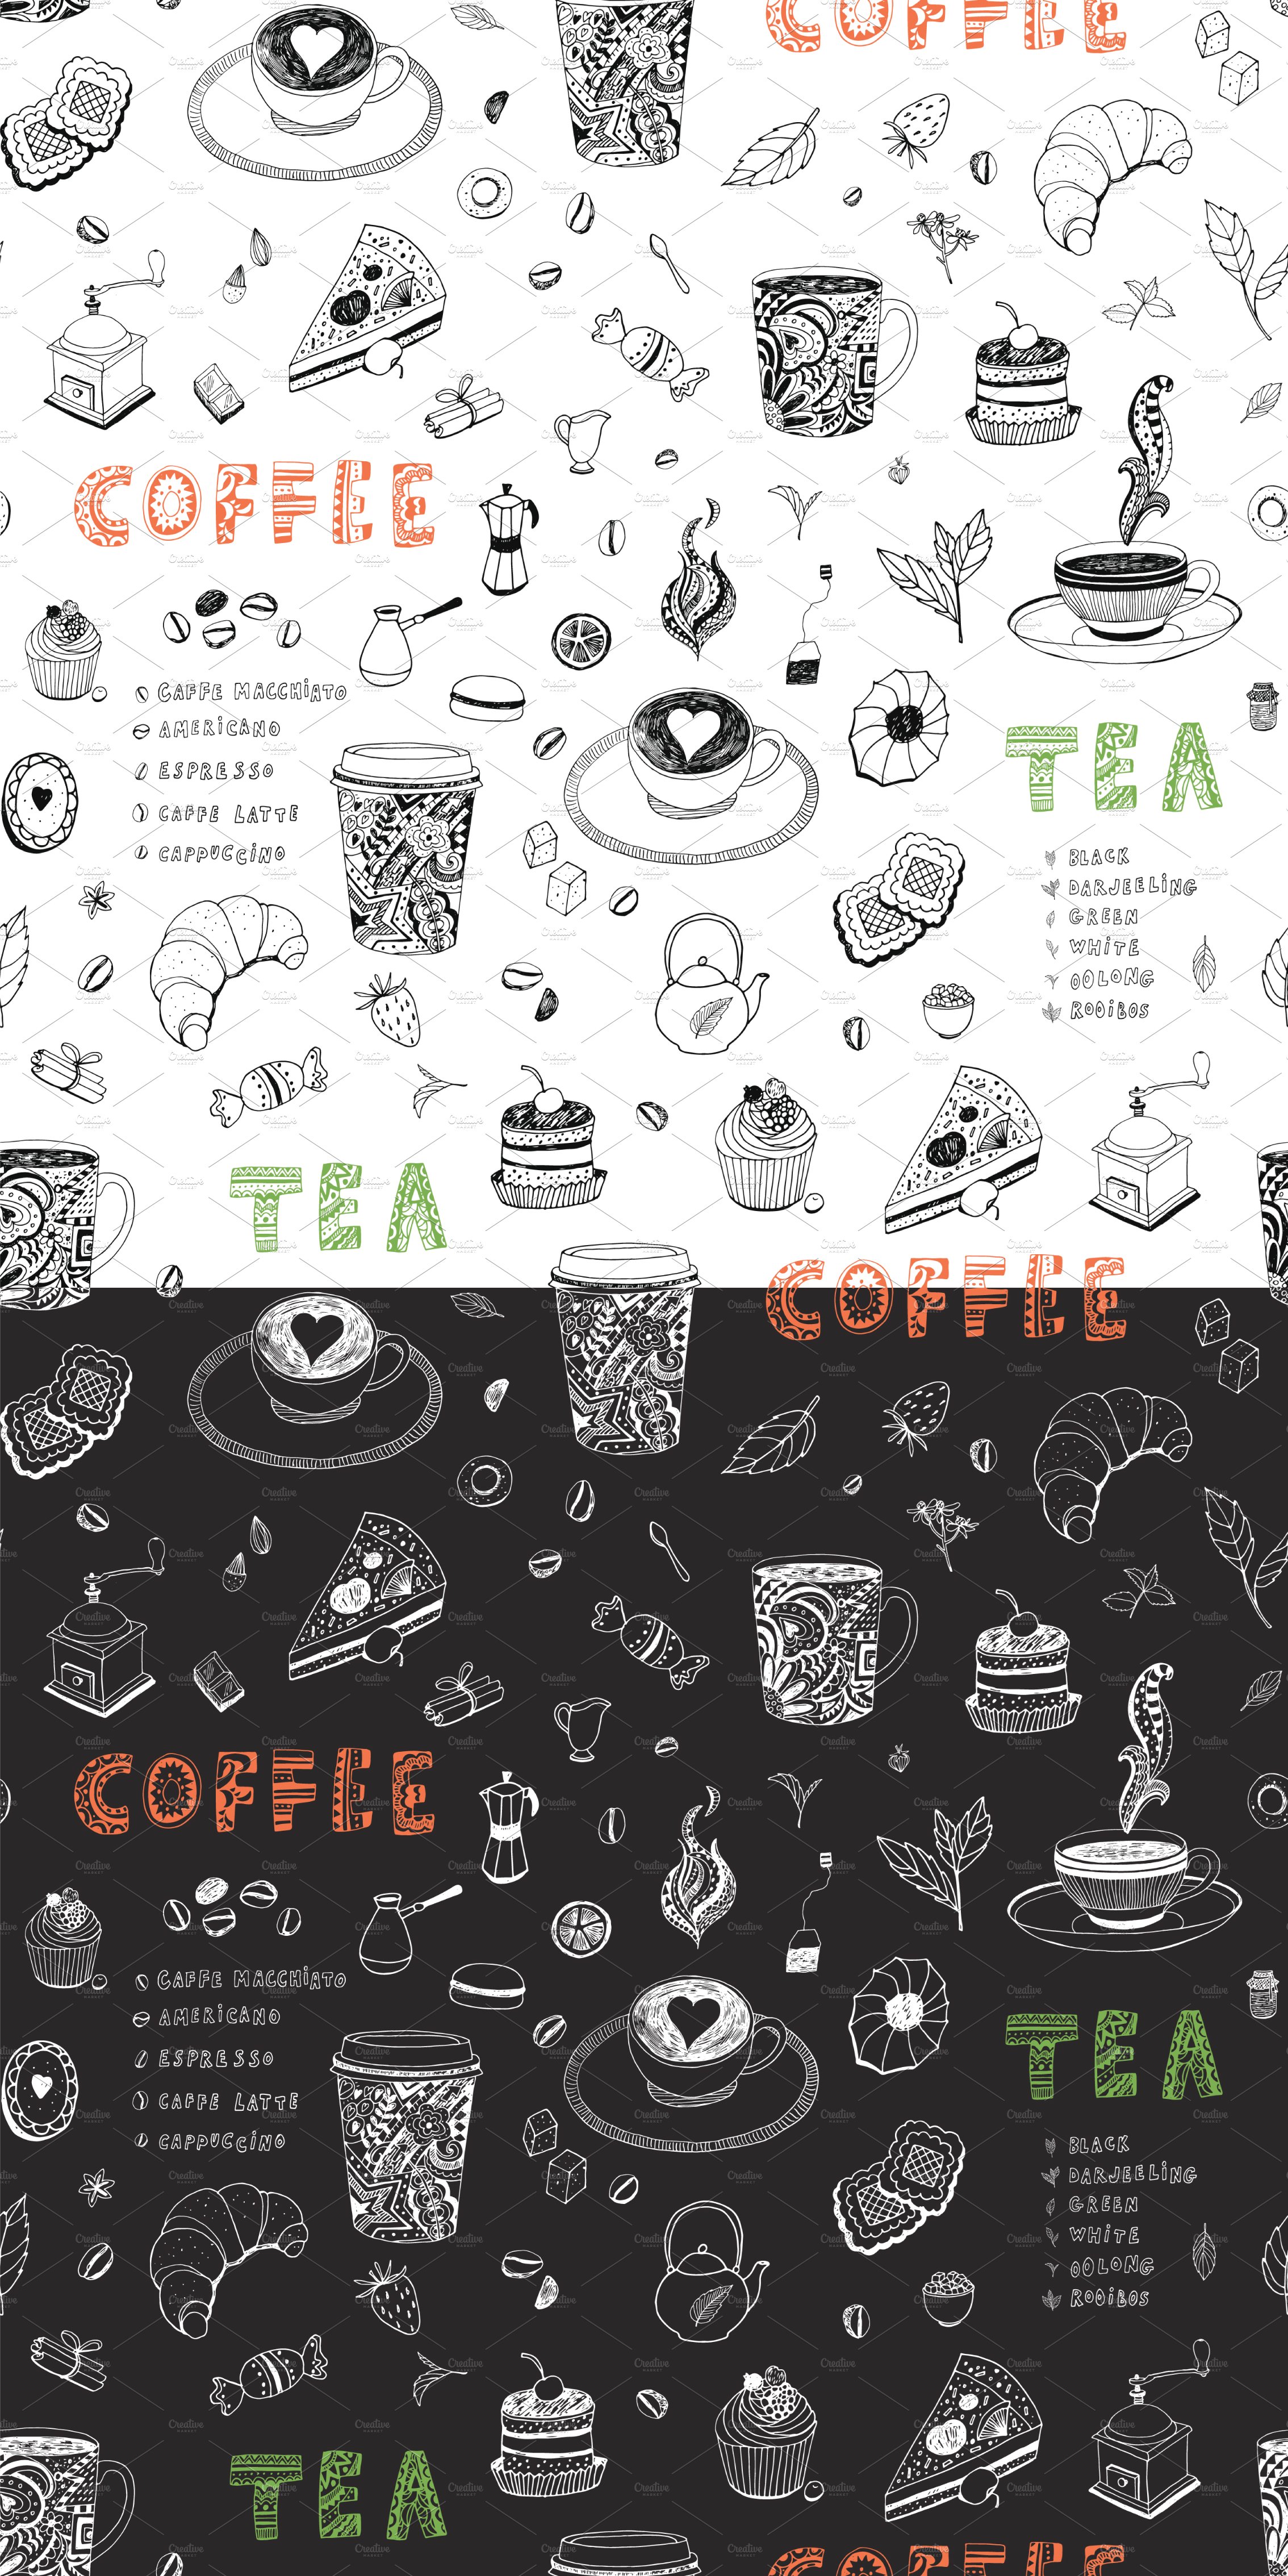 Coffee vs Tea cover image.